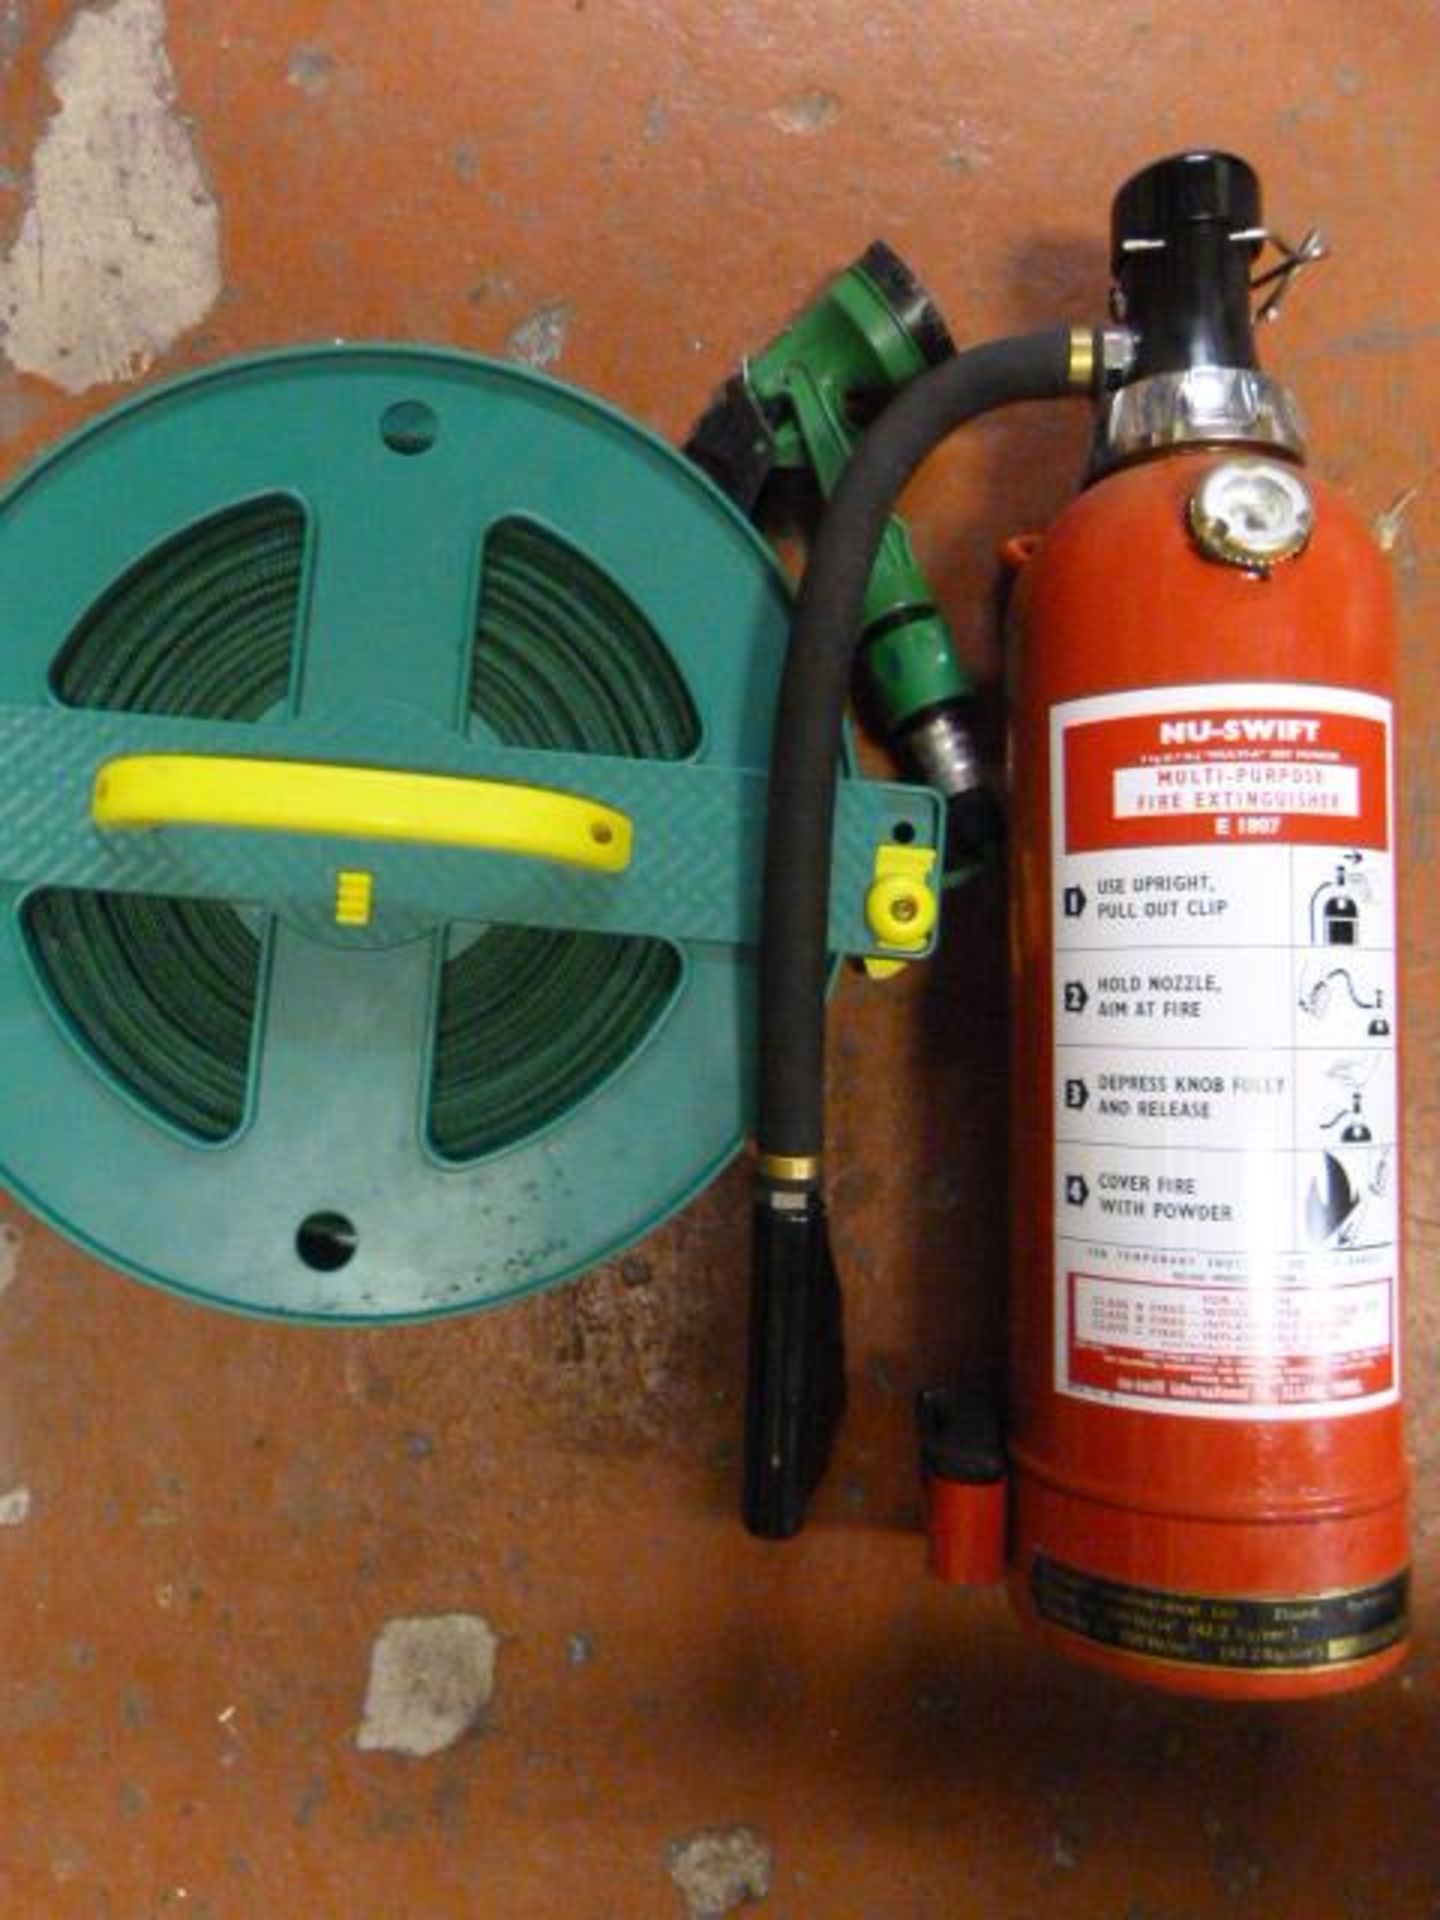 Hose Reel and Nu-Swift Multipurpose Fire Extinguis